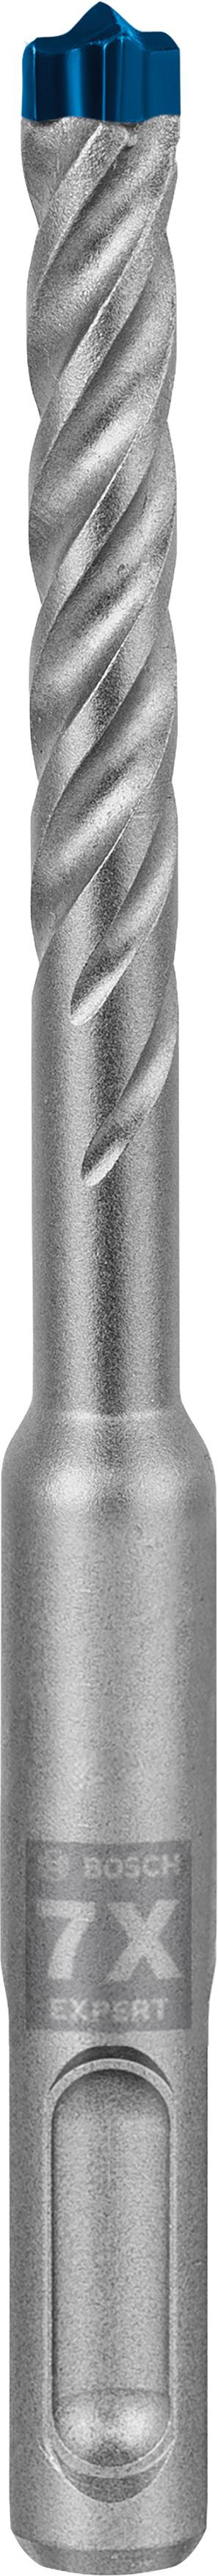 Selected image for Bosch EXPERT SDS plus-7X burgija za udarne bušilice od 7 x 50 x 115 mm 2608900083